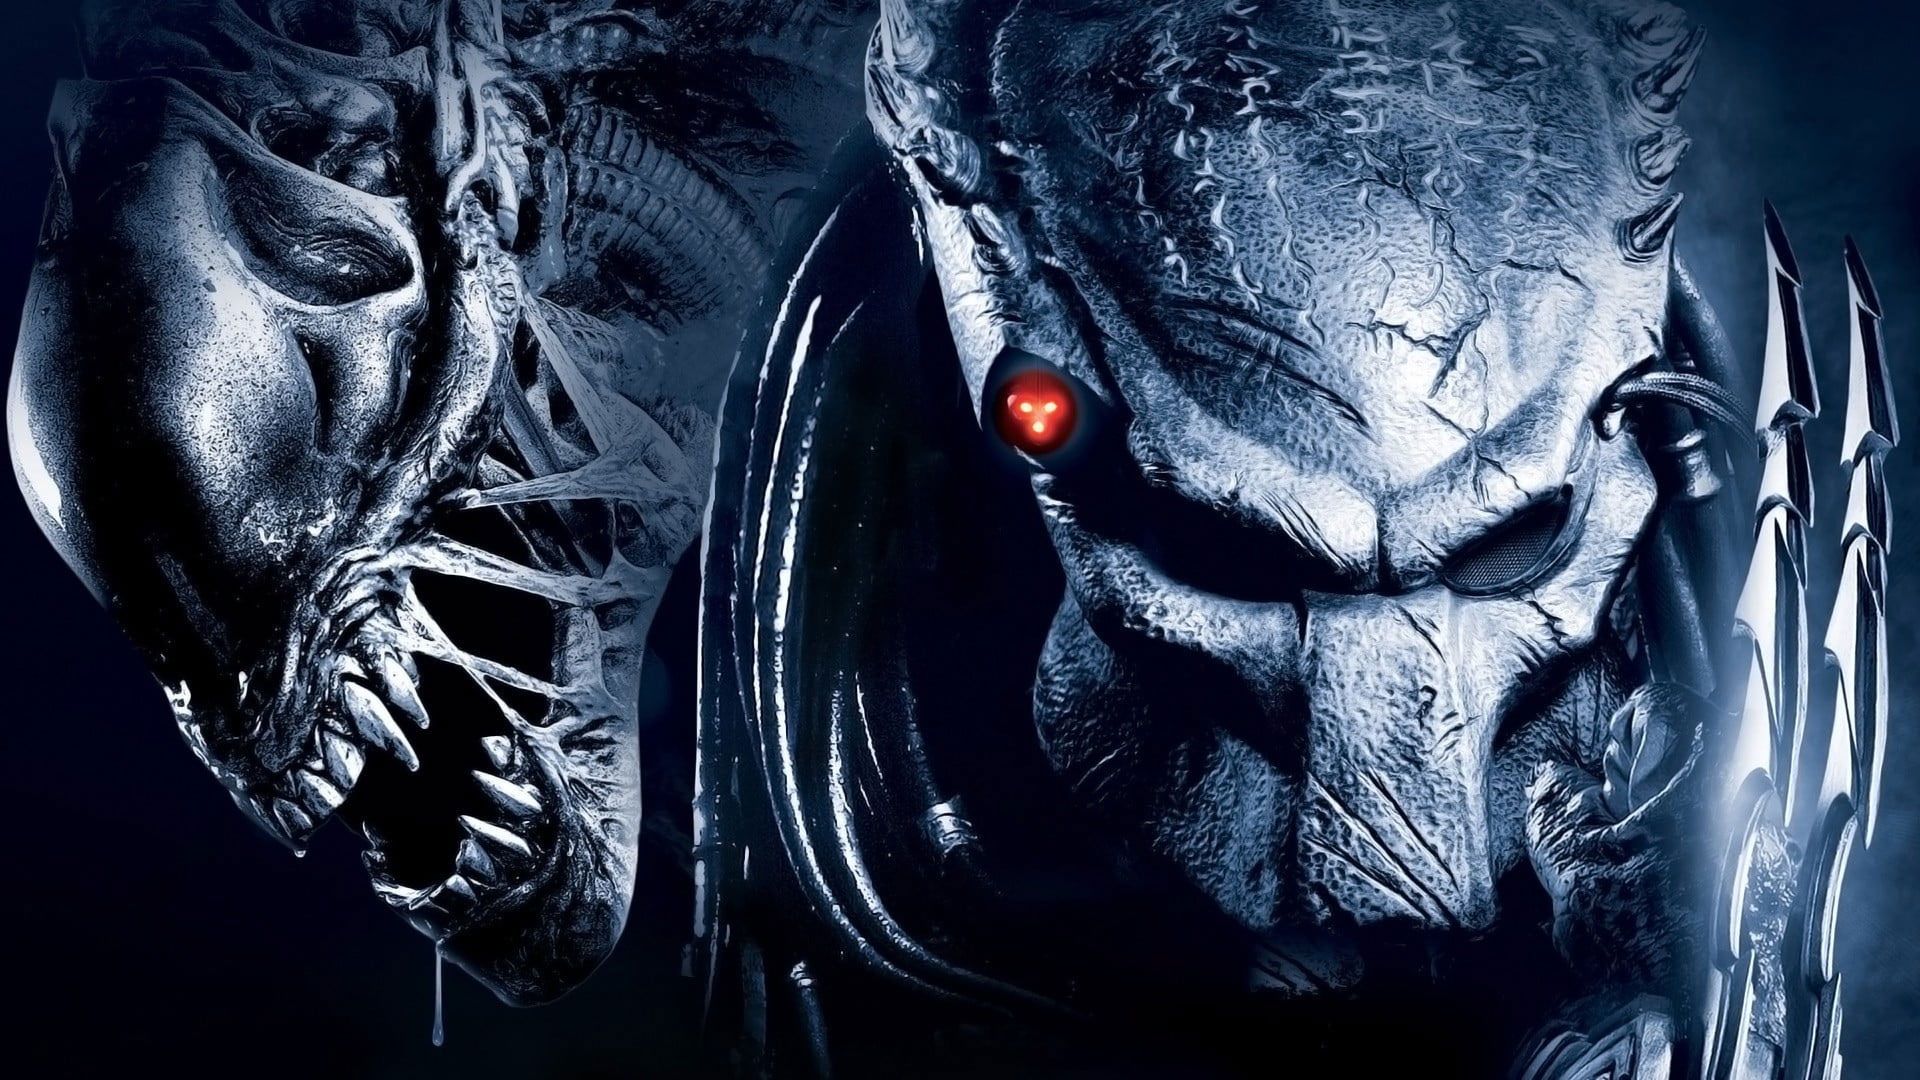 The Predator 2018 Movie Wallpapers | HD Wallpapers | ID #26900 - Alien